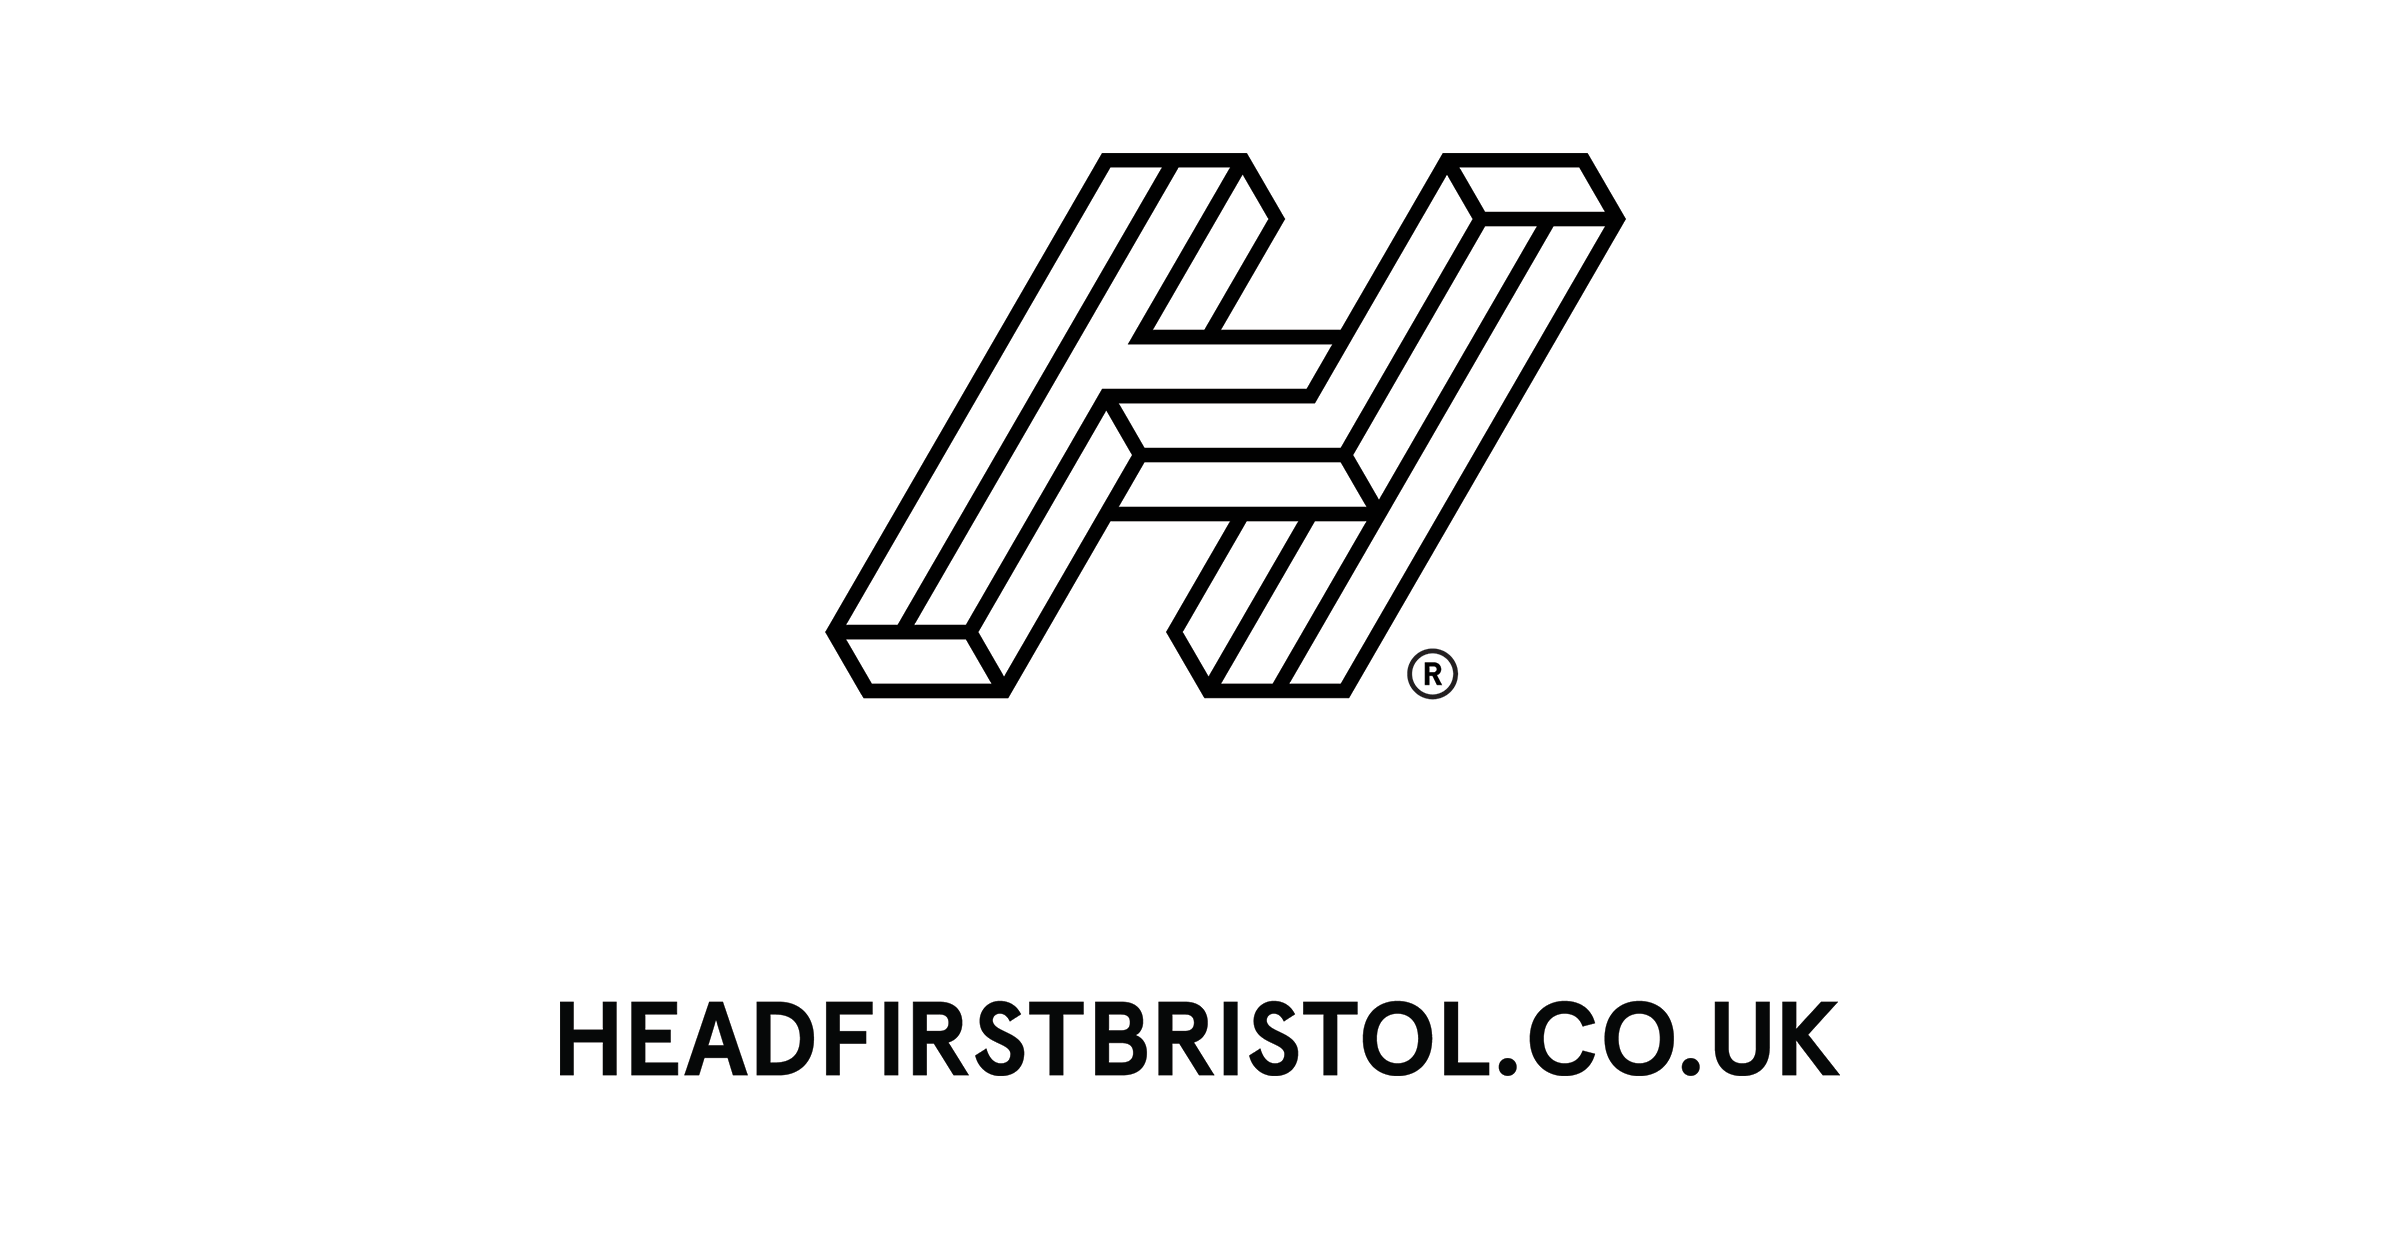 (c) Headfirstbristol.co.uk